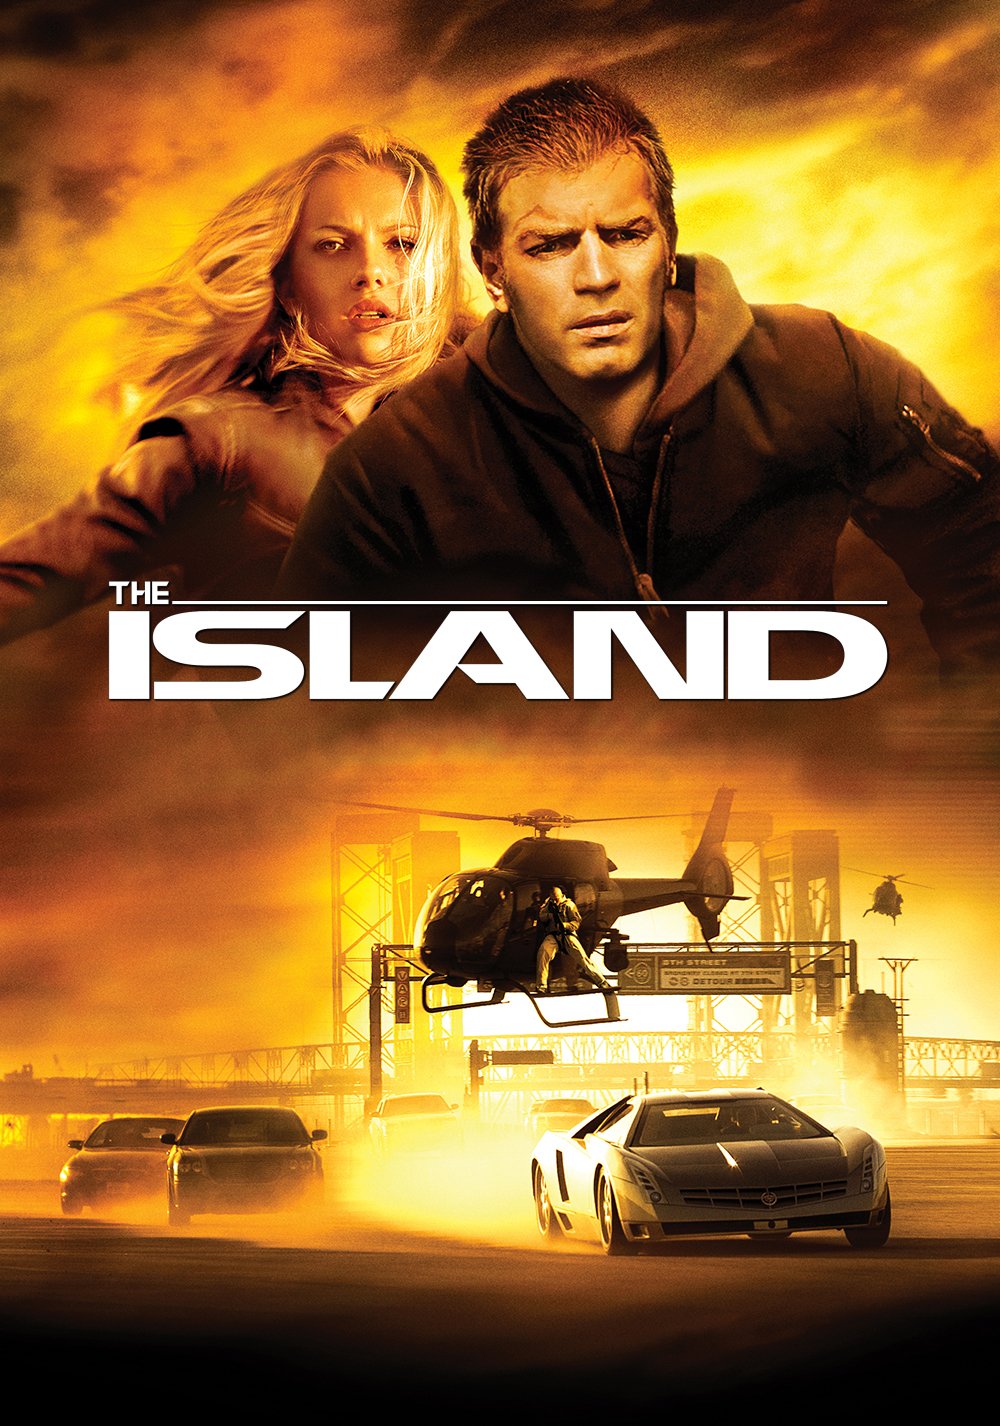 Movie The Island Movie Poster. 